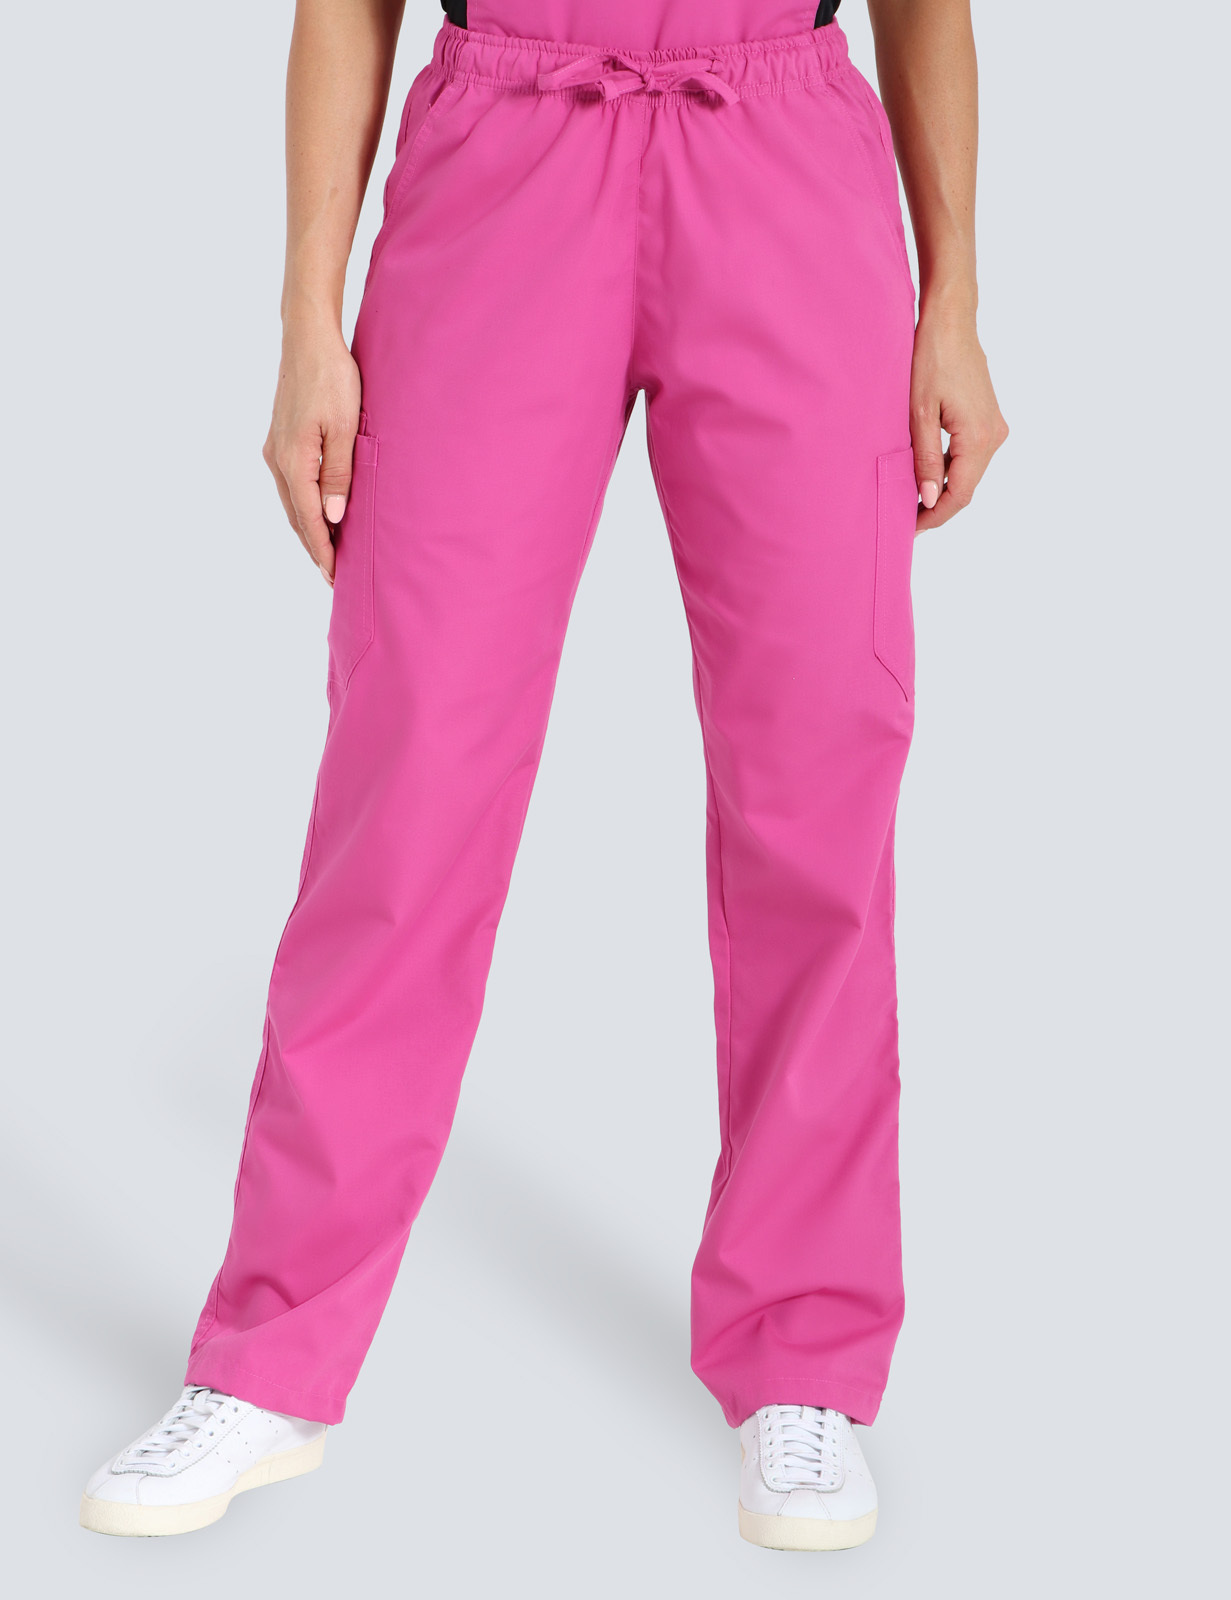 Women's Cargo Performance Pants - Pink - XX Small